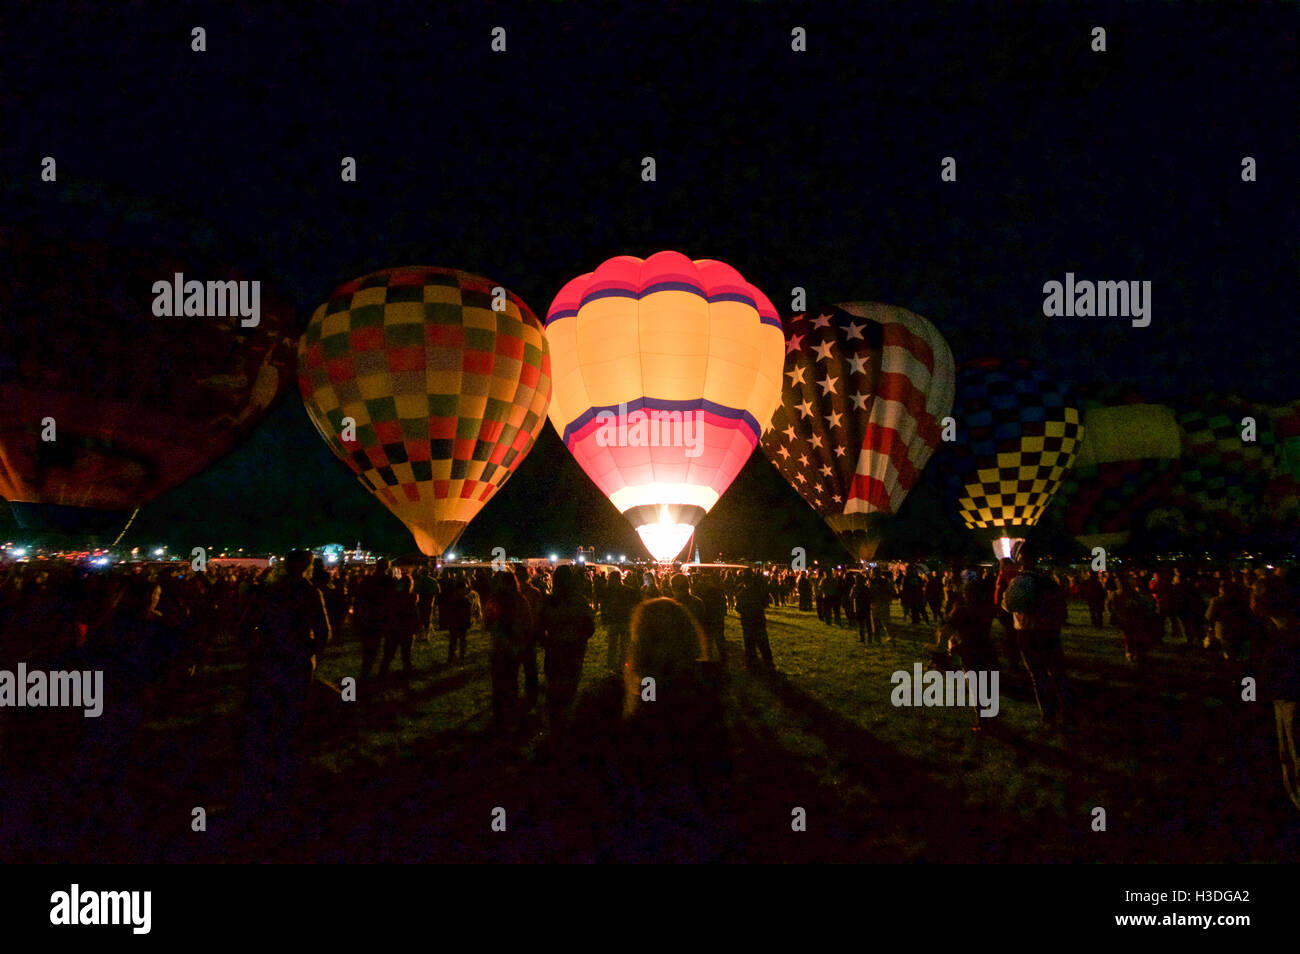 Hot air balloons prepare to go into the sky at dawn at the Albuquerque International Balloon Fiesta in New Mexico, October 2016. Stock Photo